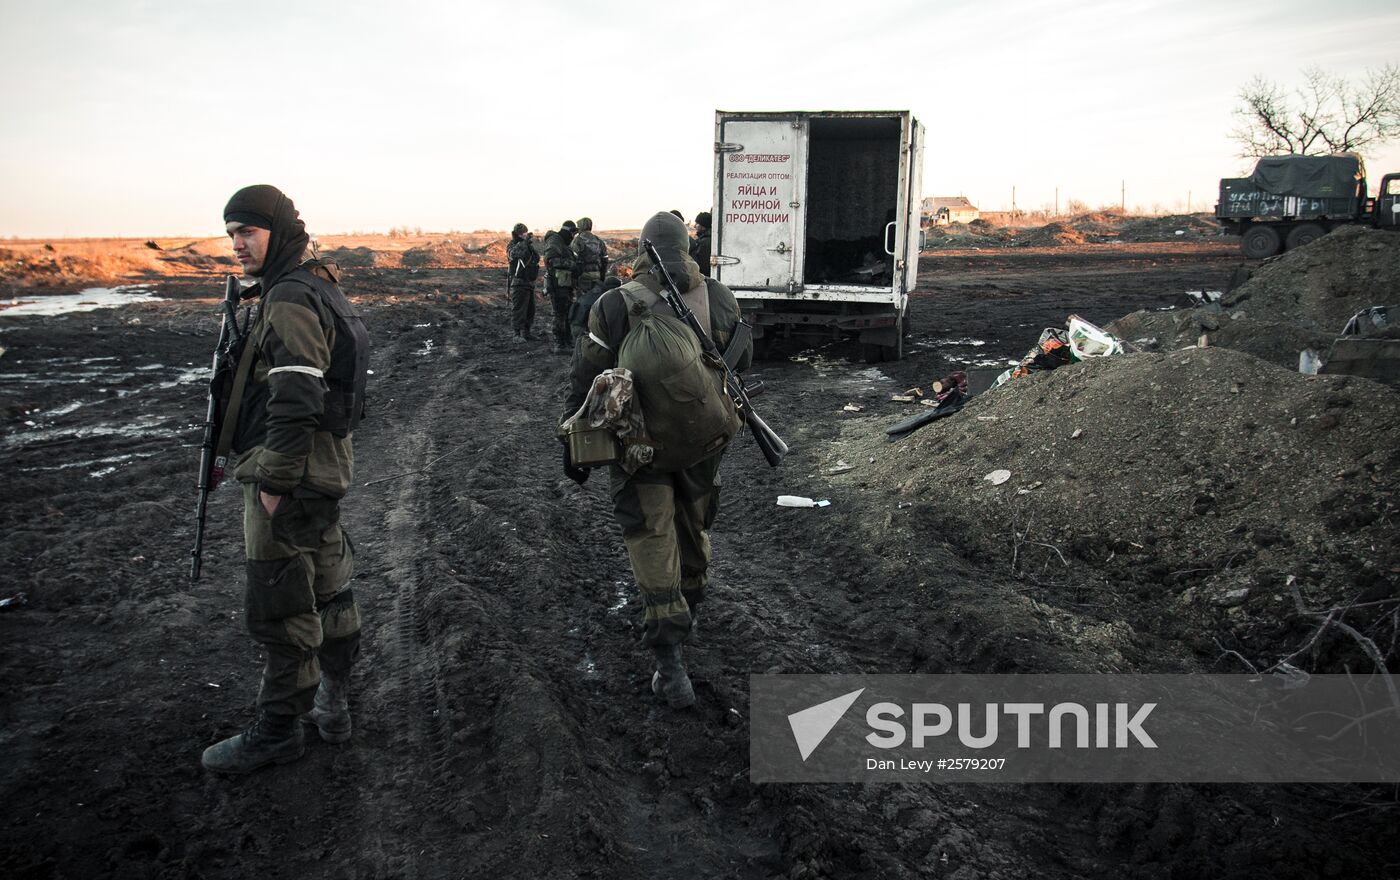 DPR self-defense forces in the Donetsk Region